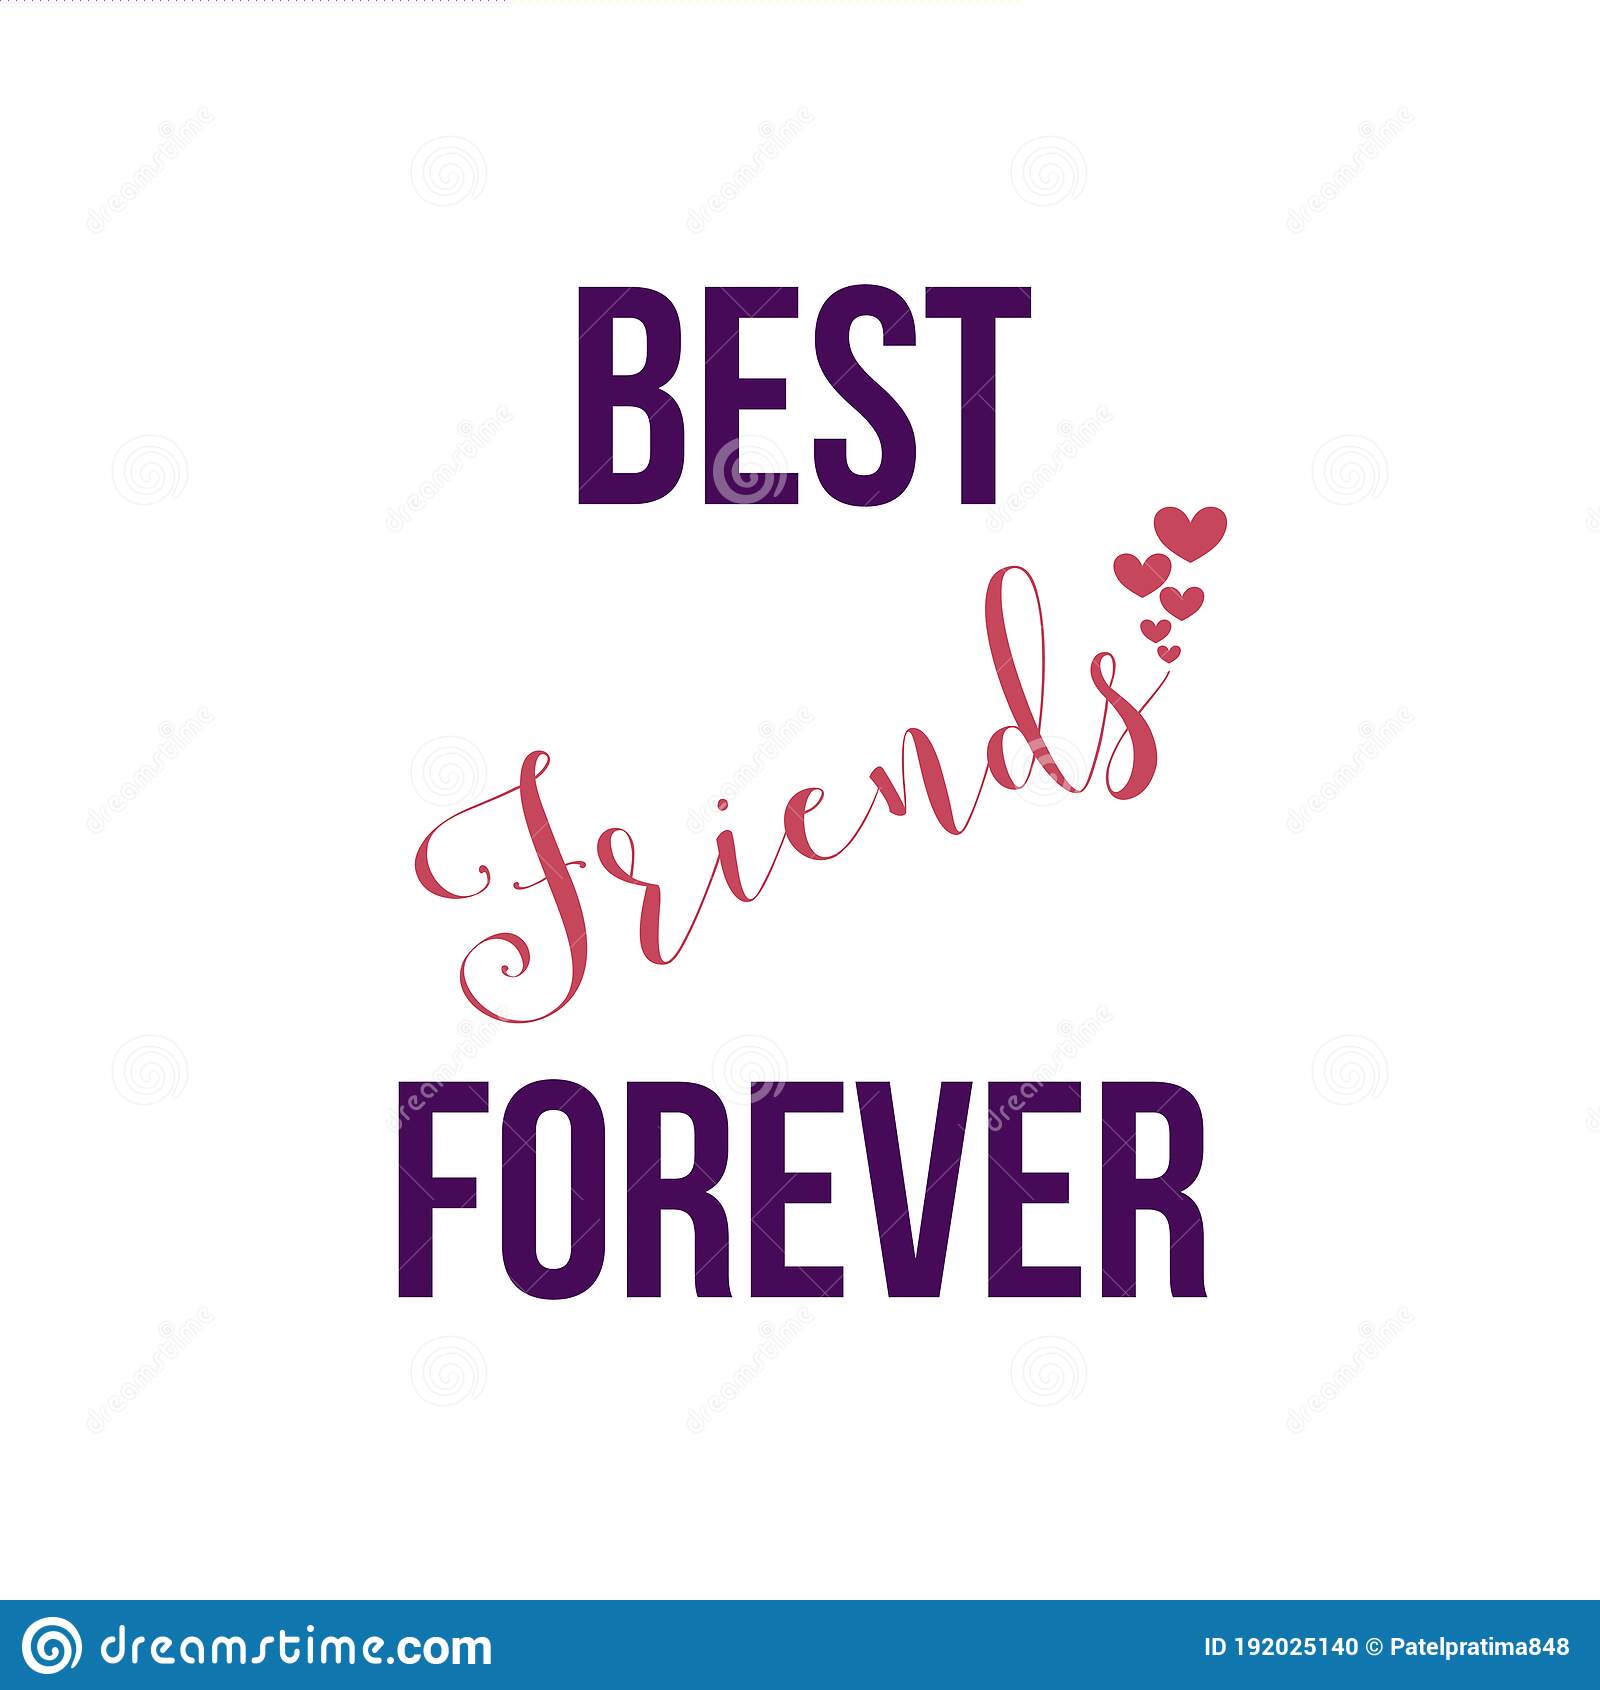 Friendship Art - Best Friends Forever - Sharon Cummings Greeting Card by  Sharon Cummings